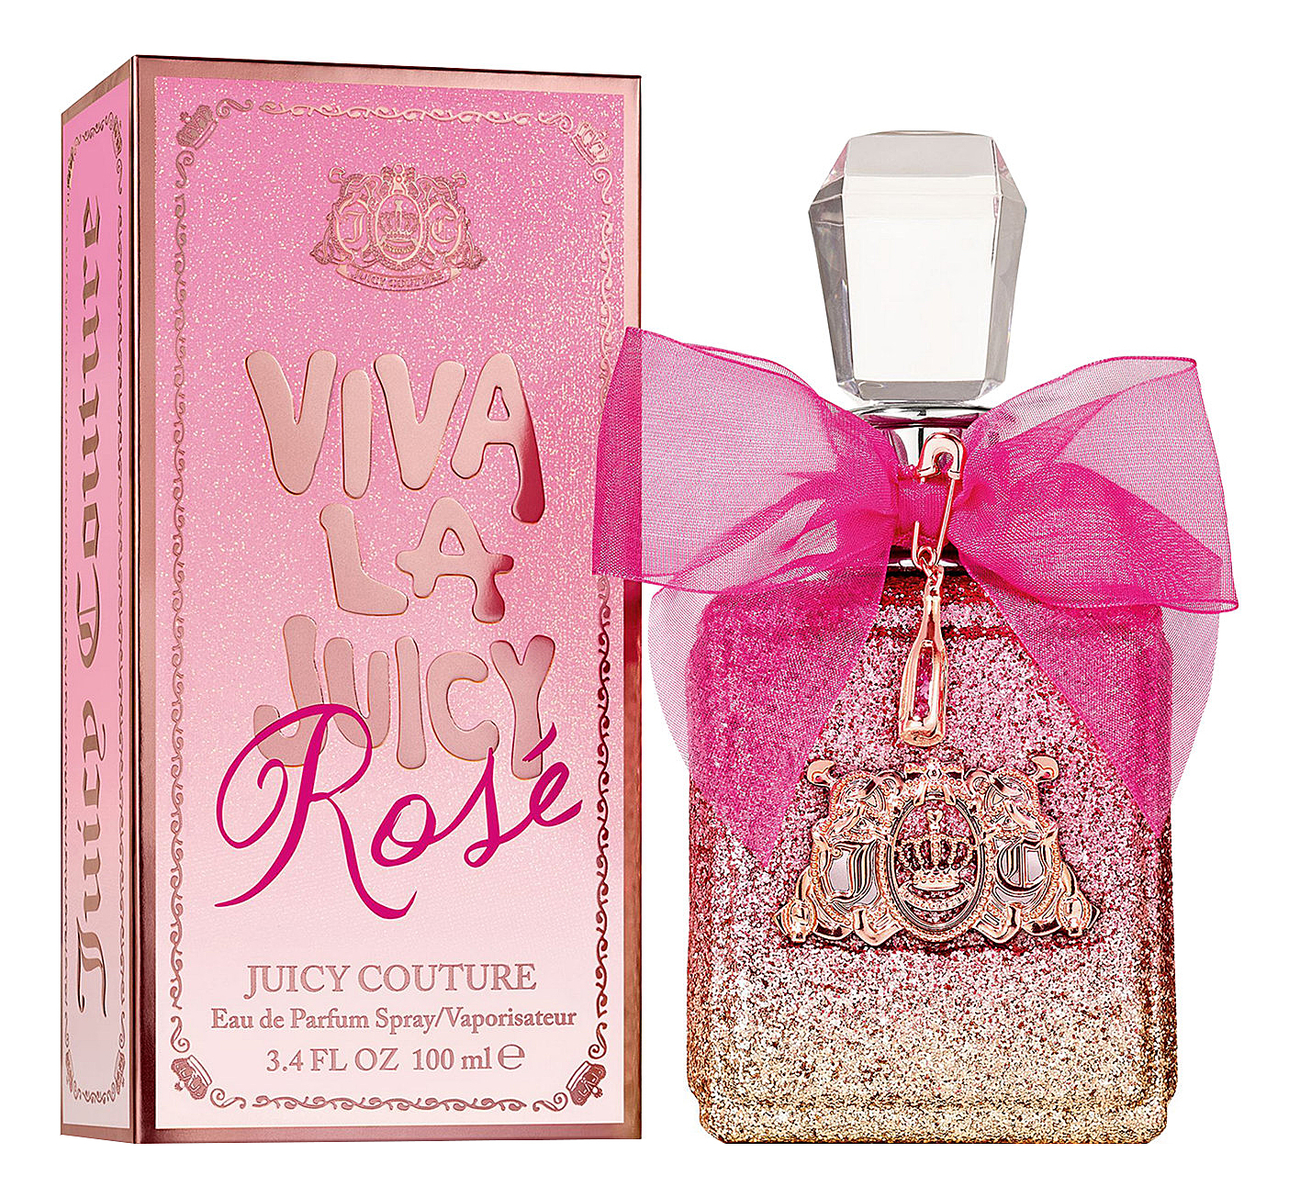 Juicy Couture Viva la juicy Rose 50ml